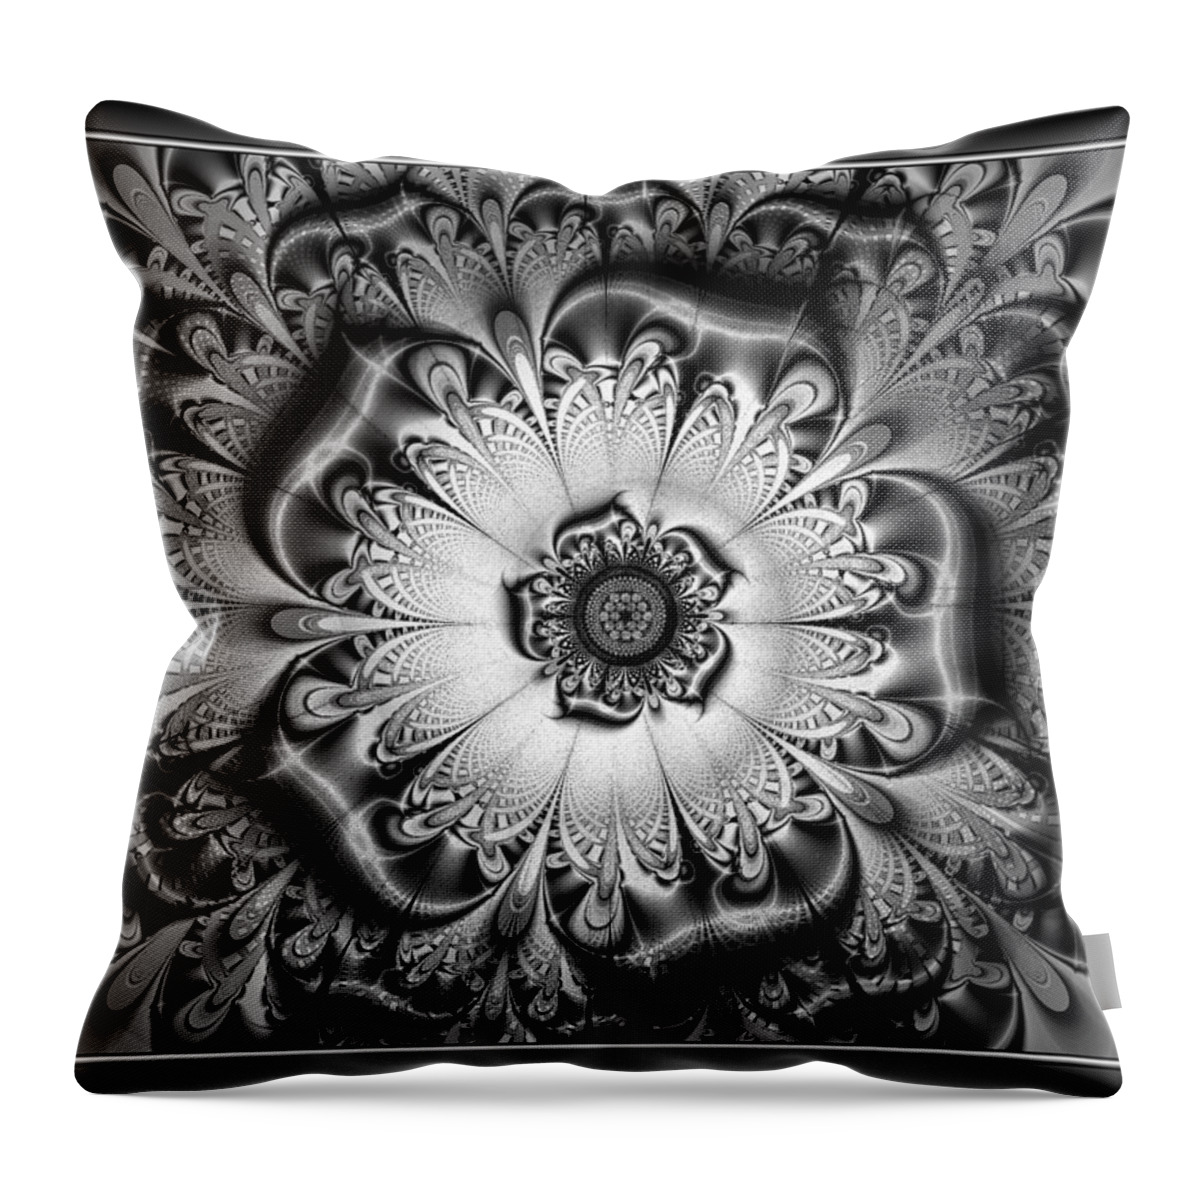 Floret Throw Pillow featuring the digital art Fancy Floret by Kiki Art